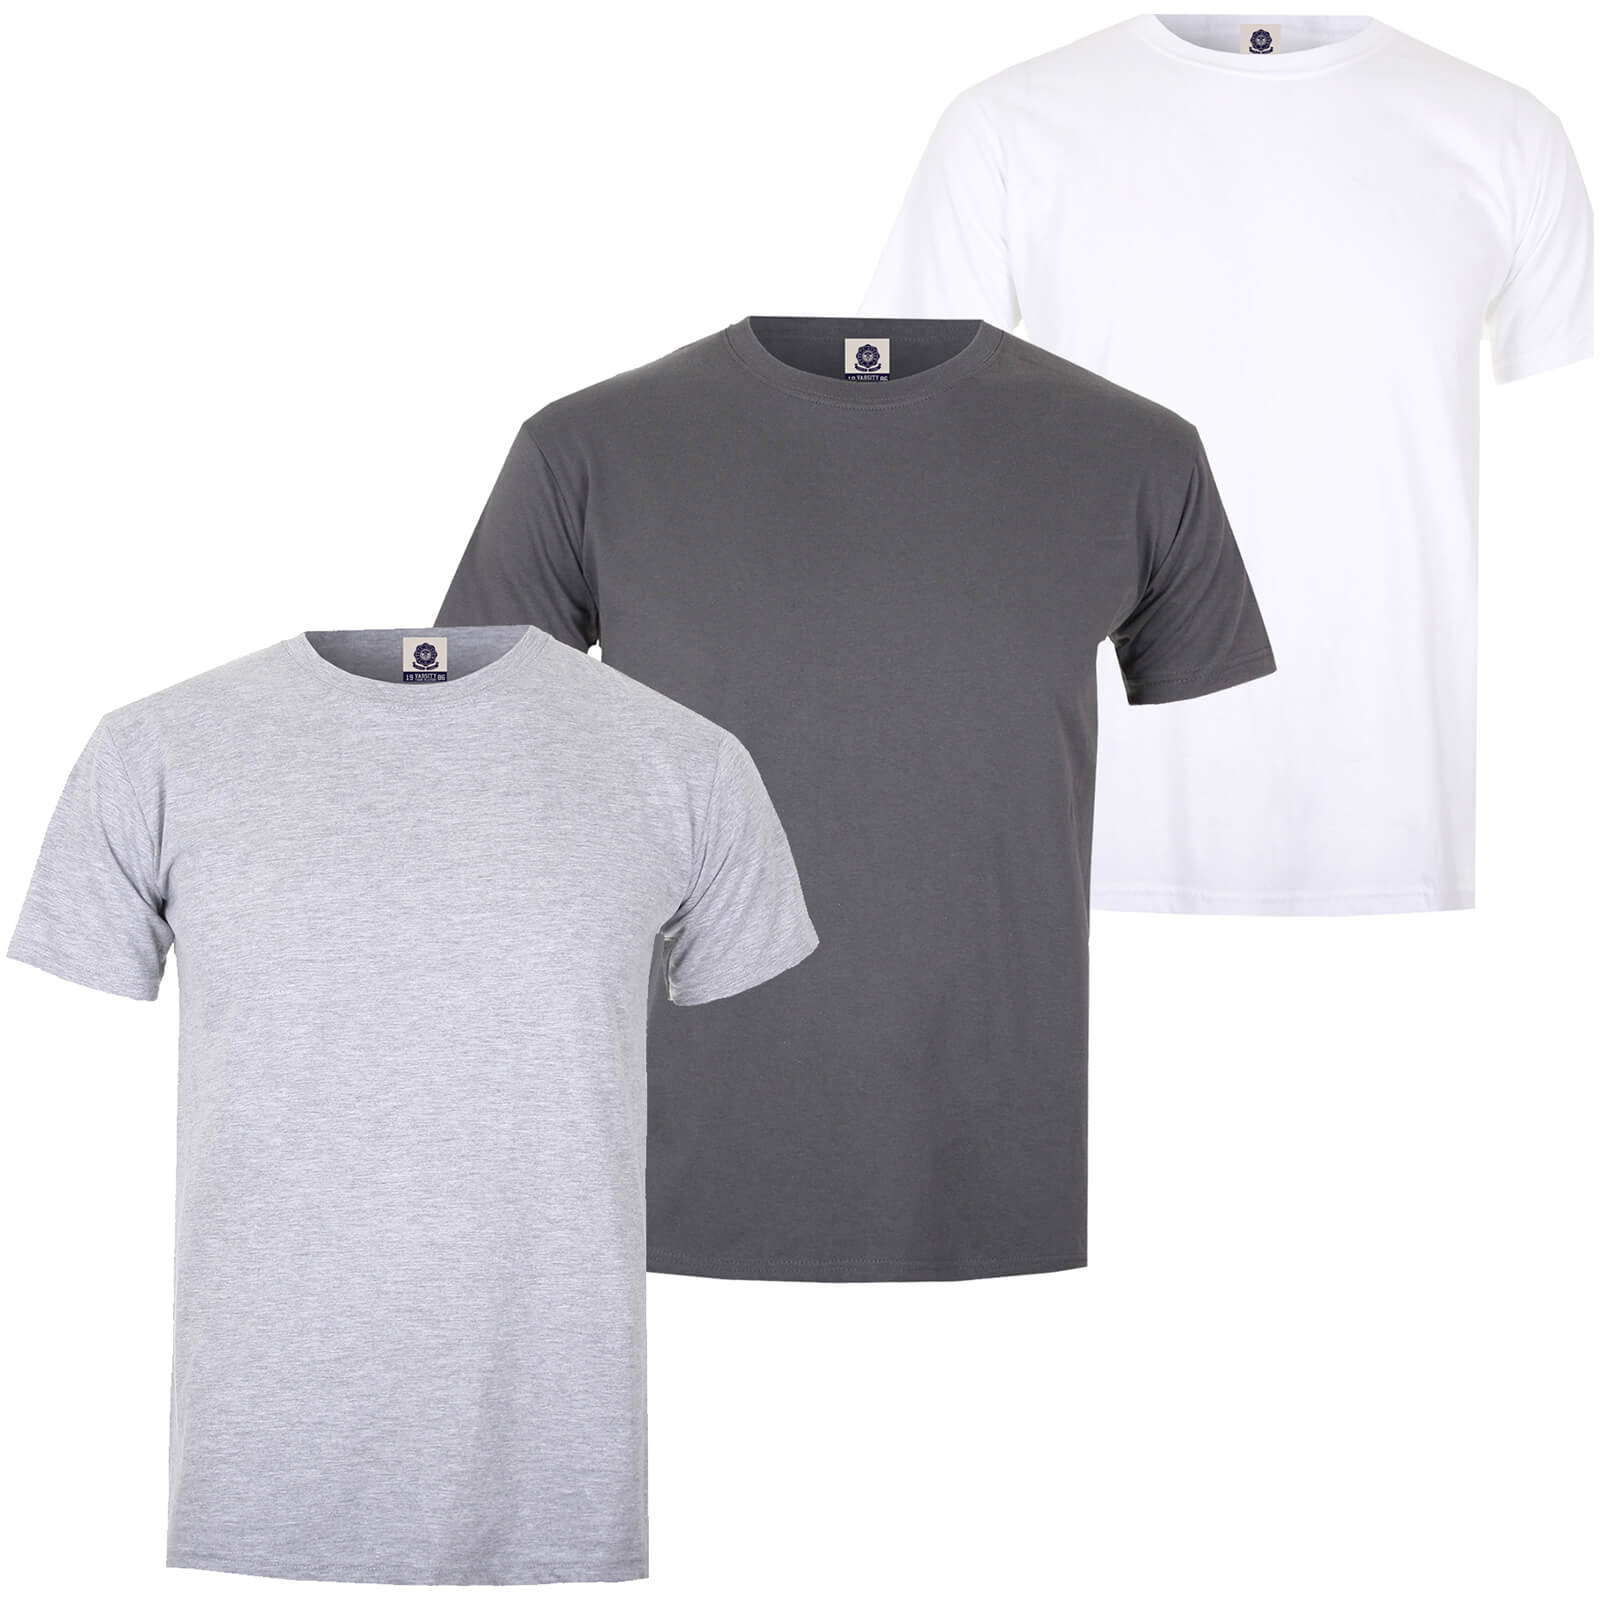 Varsity Team Players Men's T-Shirt 3 Pack - Charcoal/White/Grey - XXL